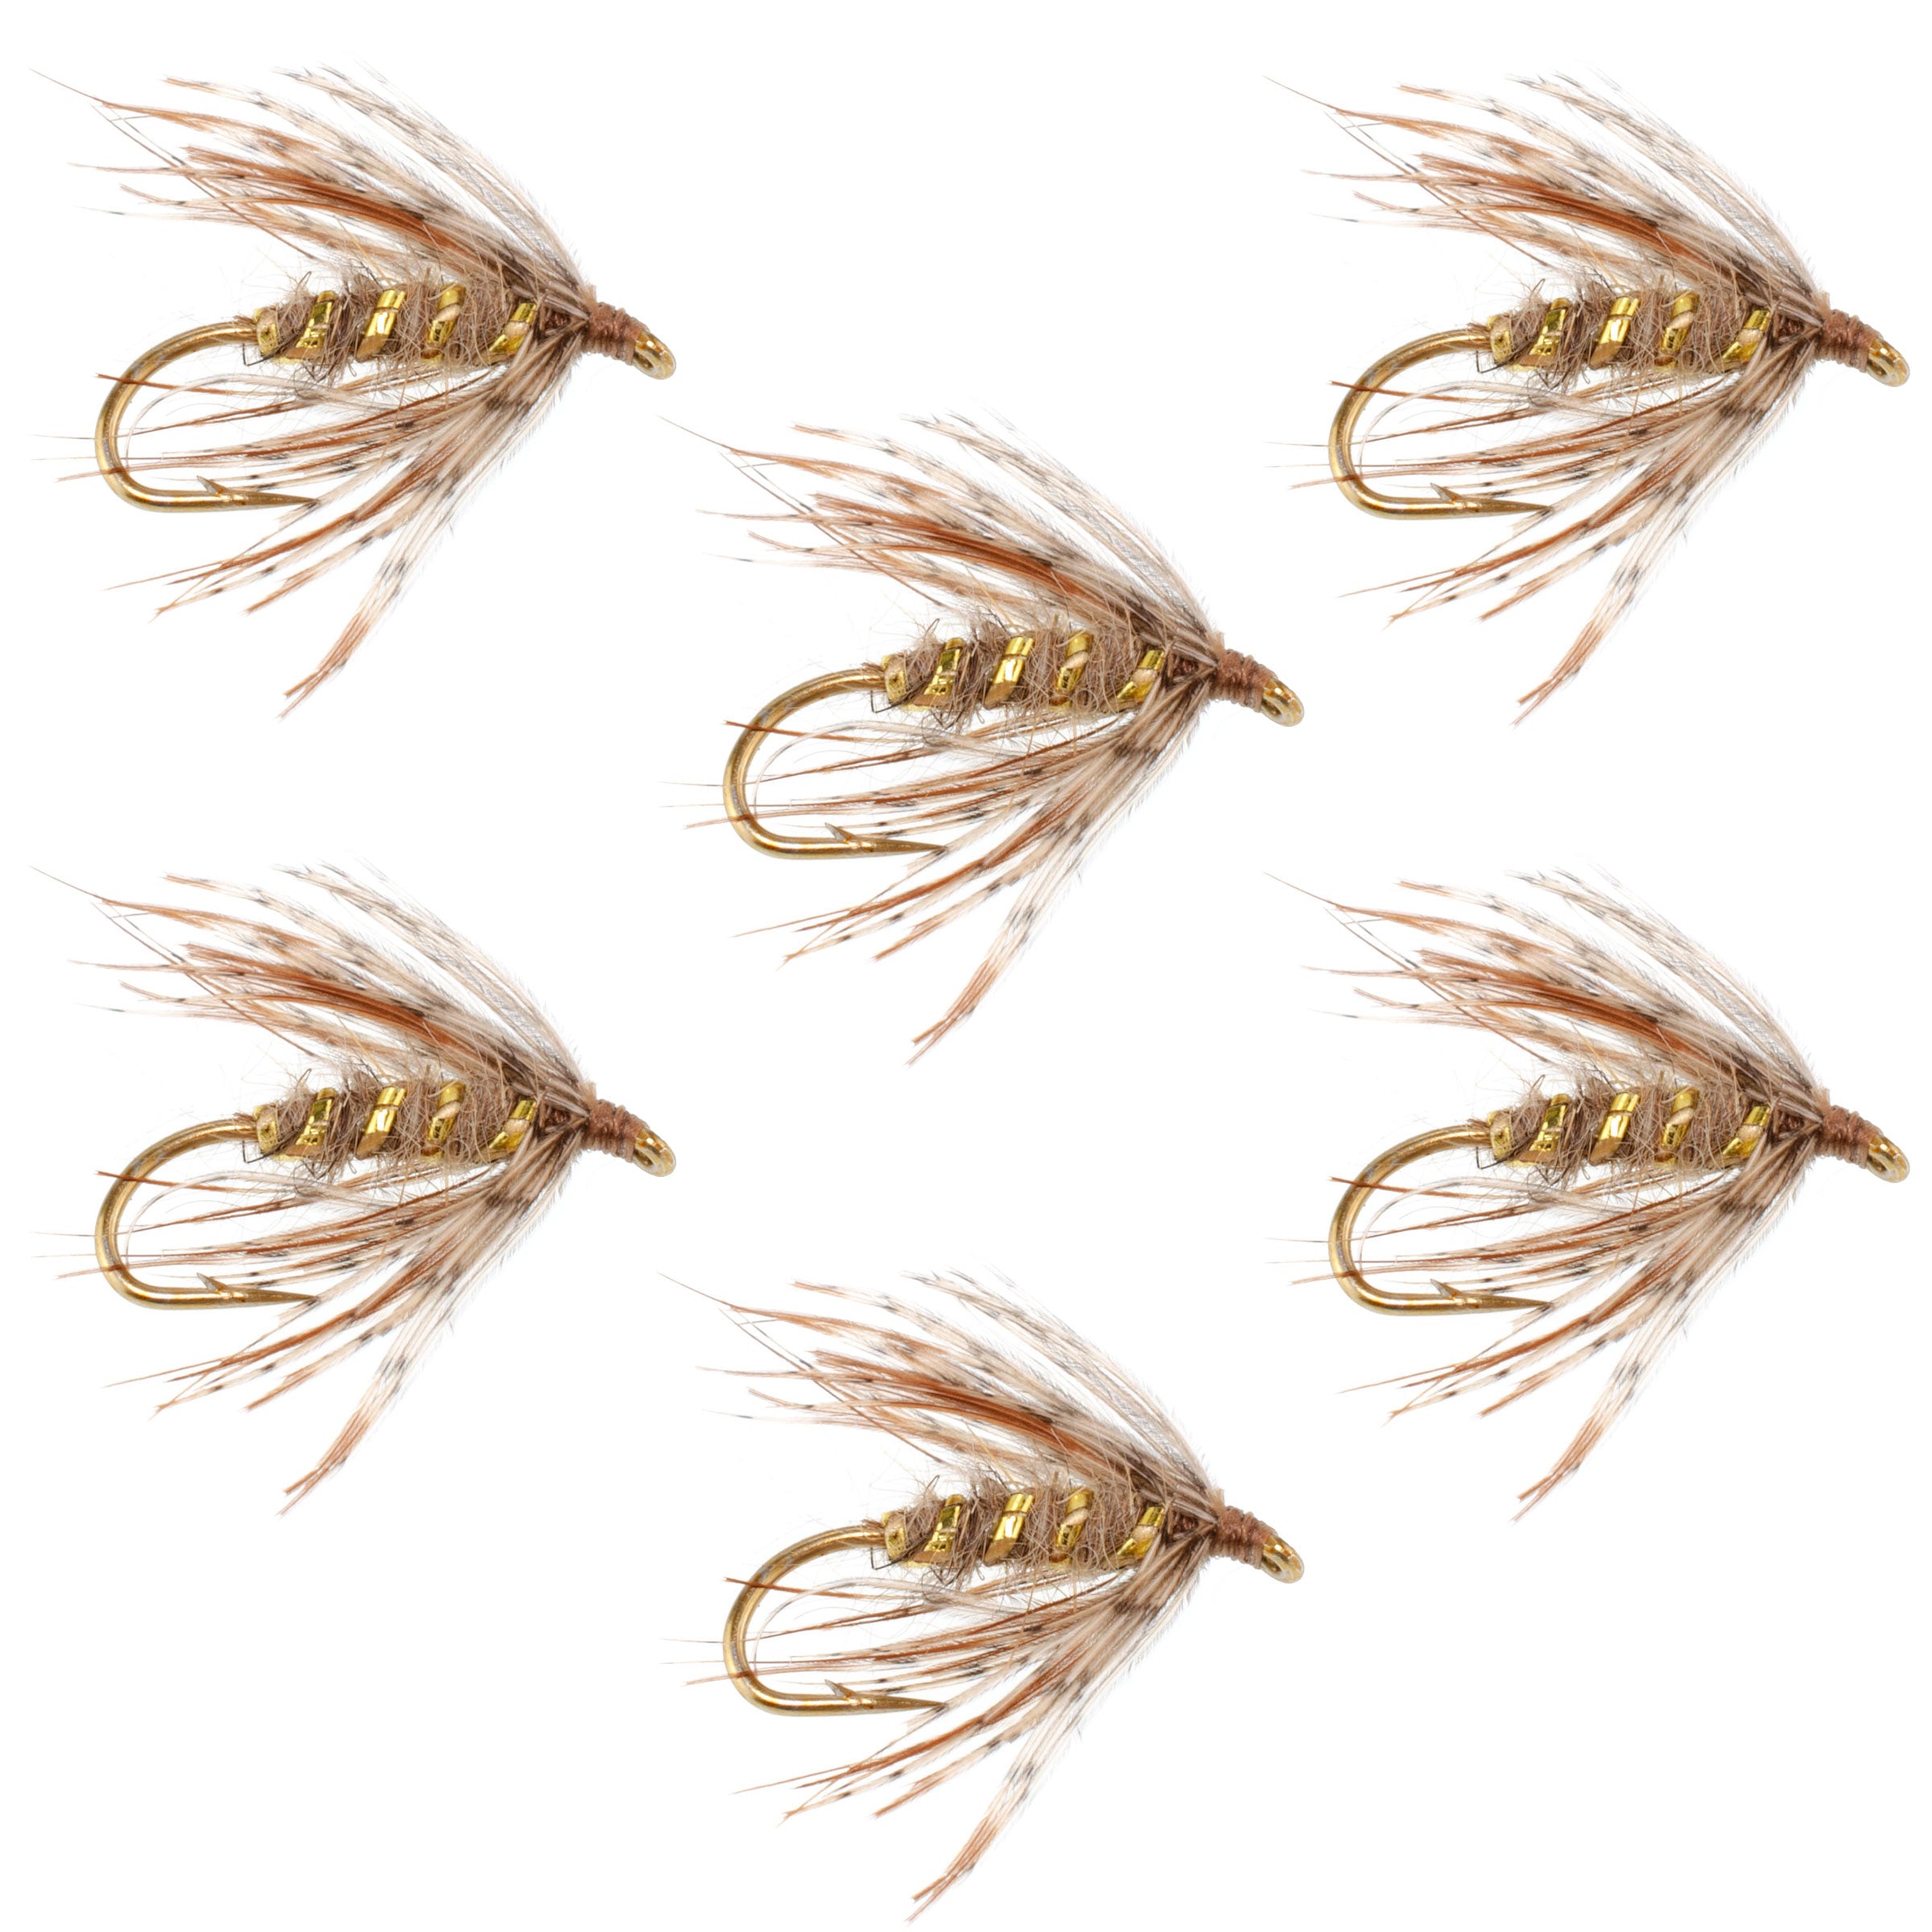 Soft Hackle March Brown Partridge Fly Fishing Wet Flies - 6 Flies Hook Size 16